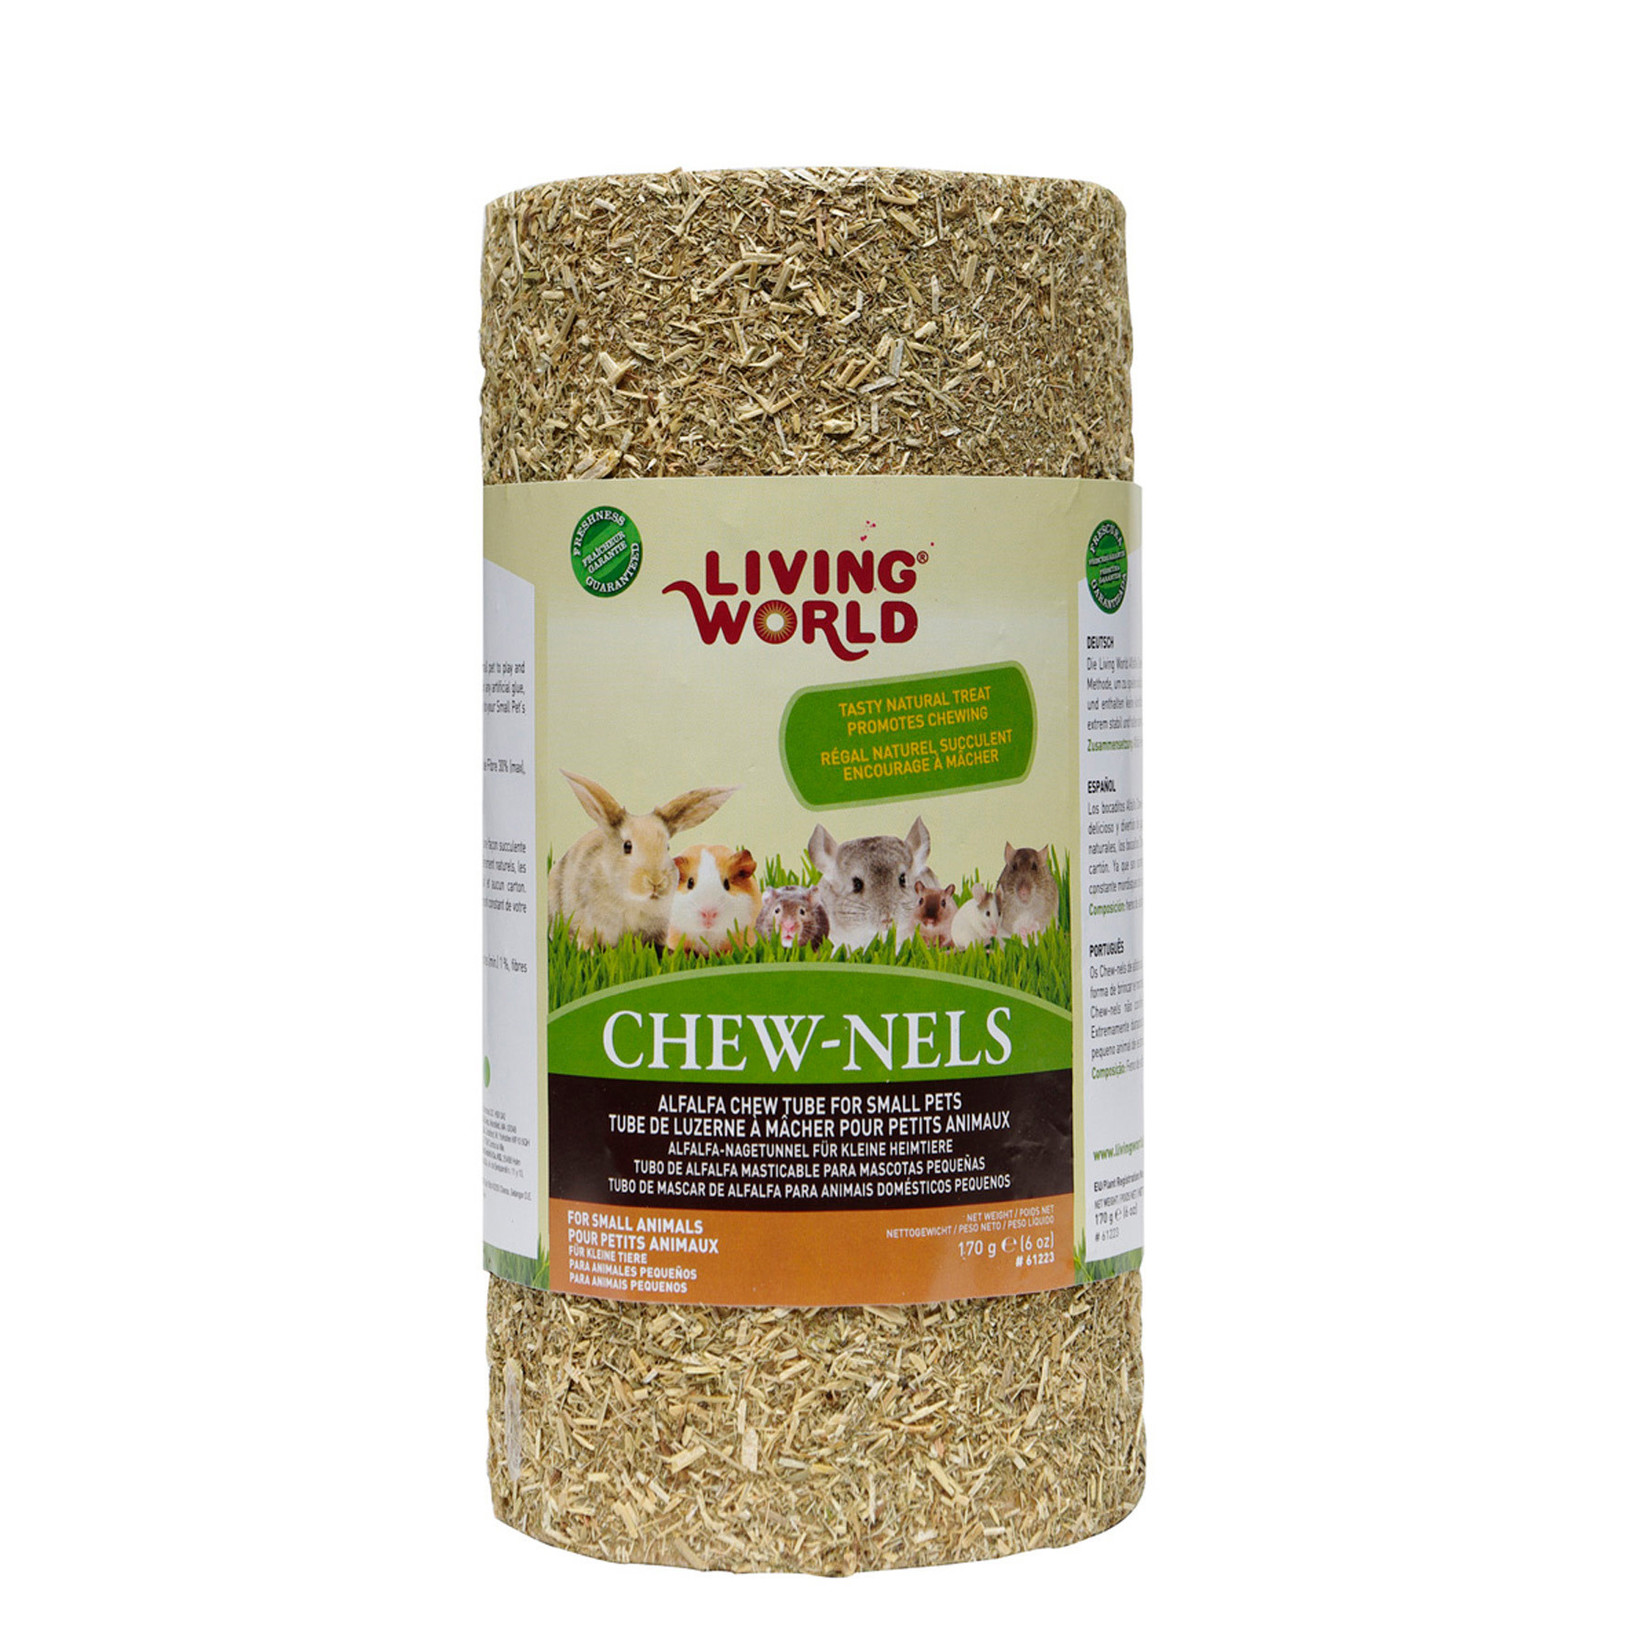 LIVING WORLD Living World Alfalfa Chew-nels - Medium